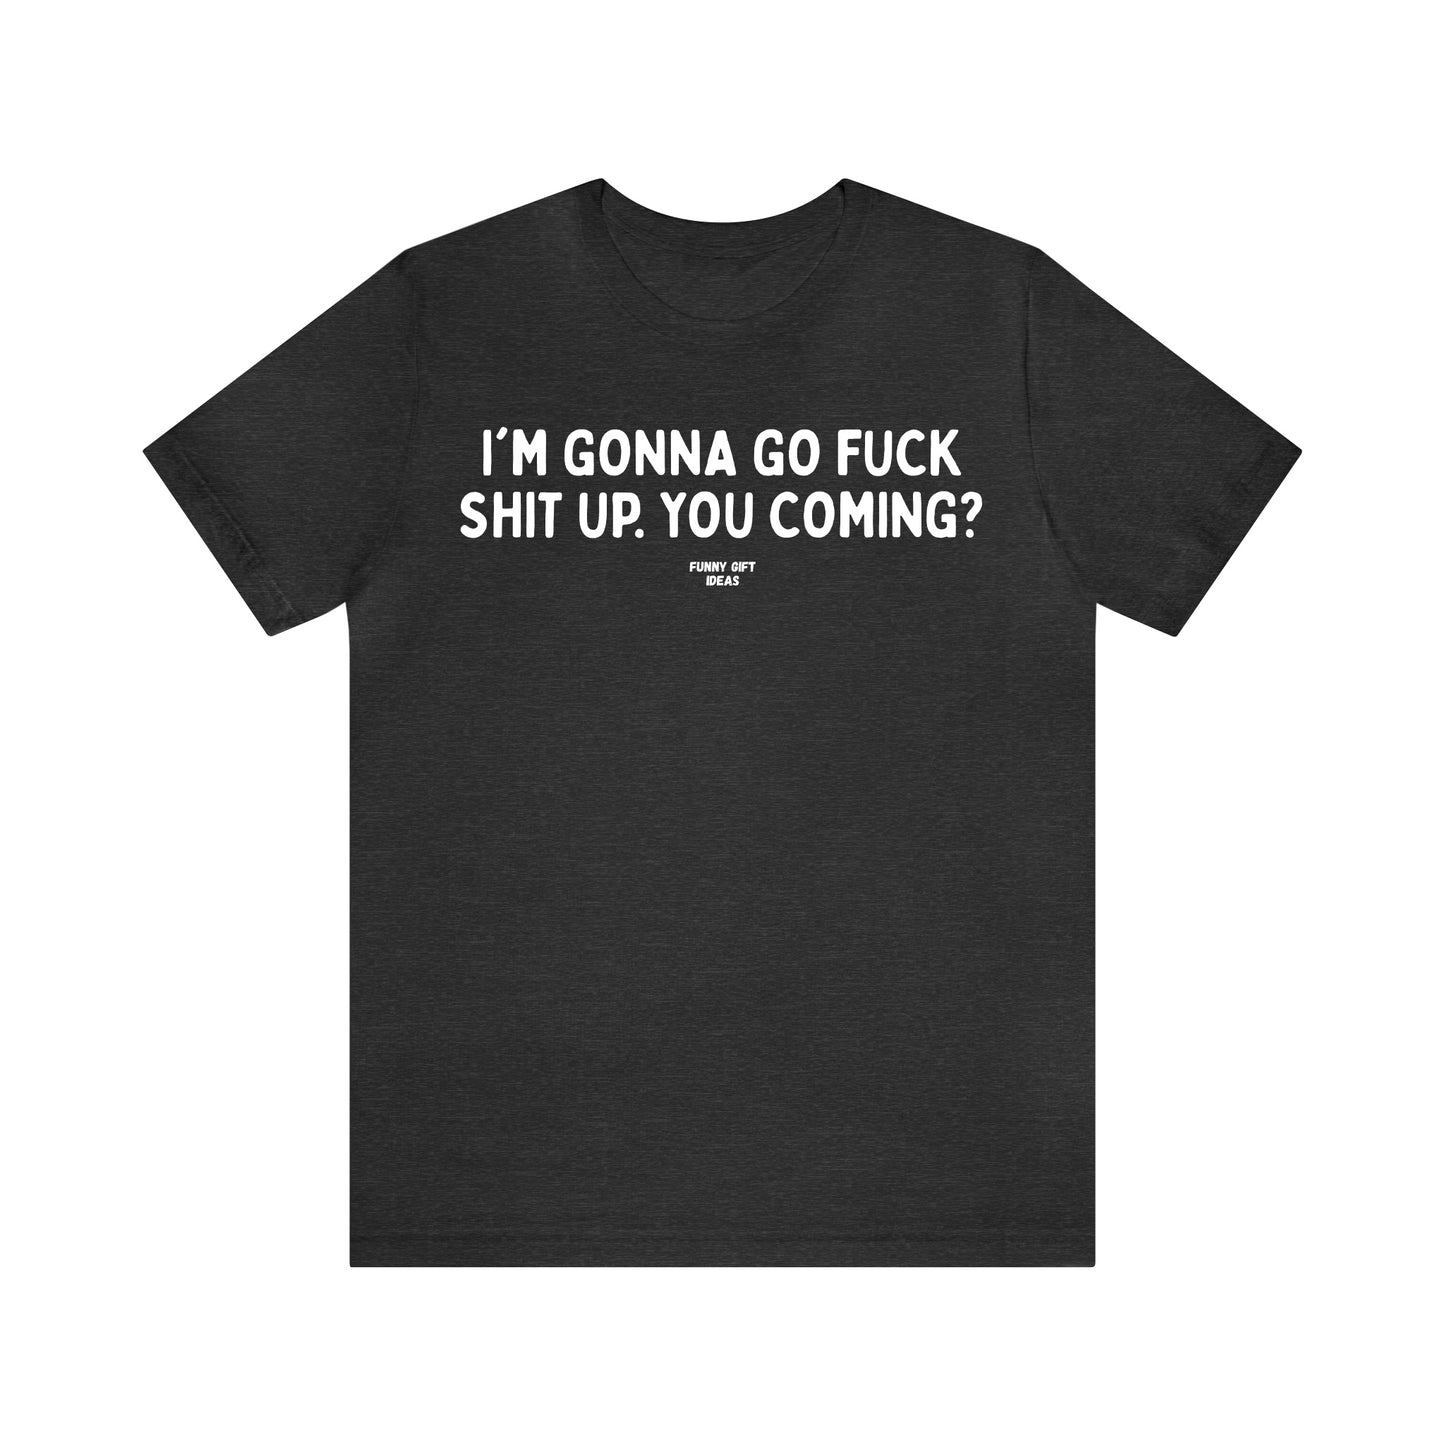 Funny Shirts for Women - I'm Gonna Go Fuck Shit Up. You Coming? - Women's T Shirts